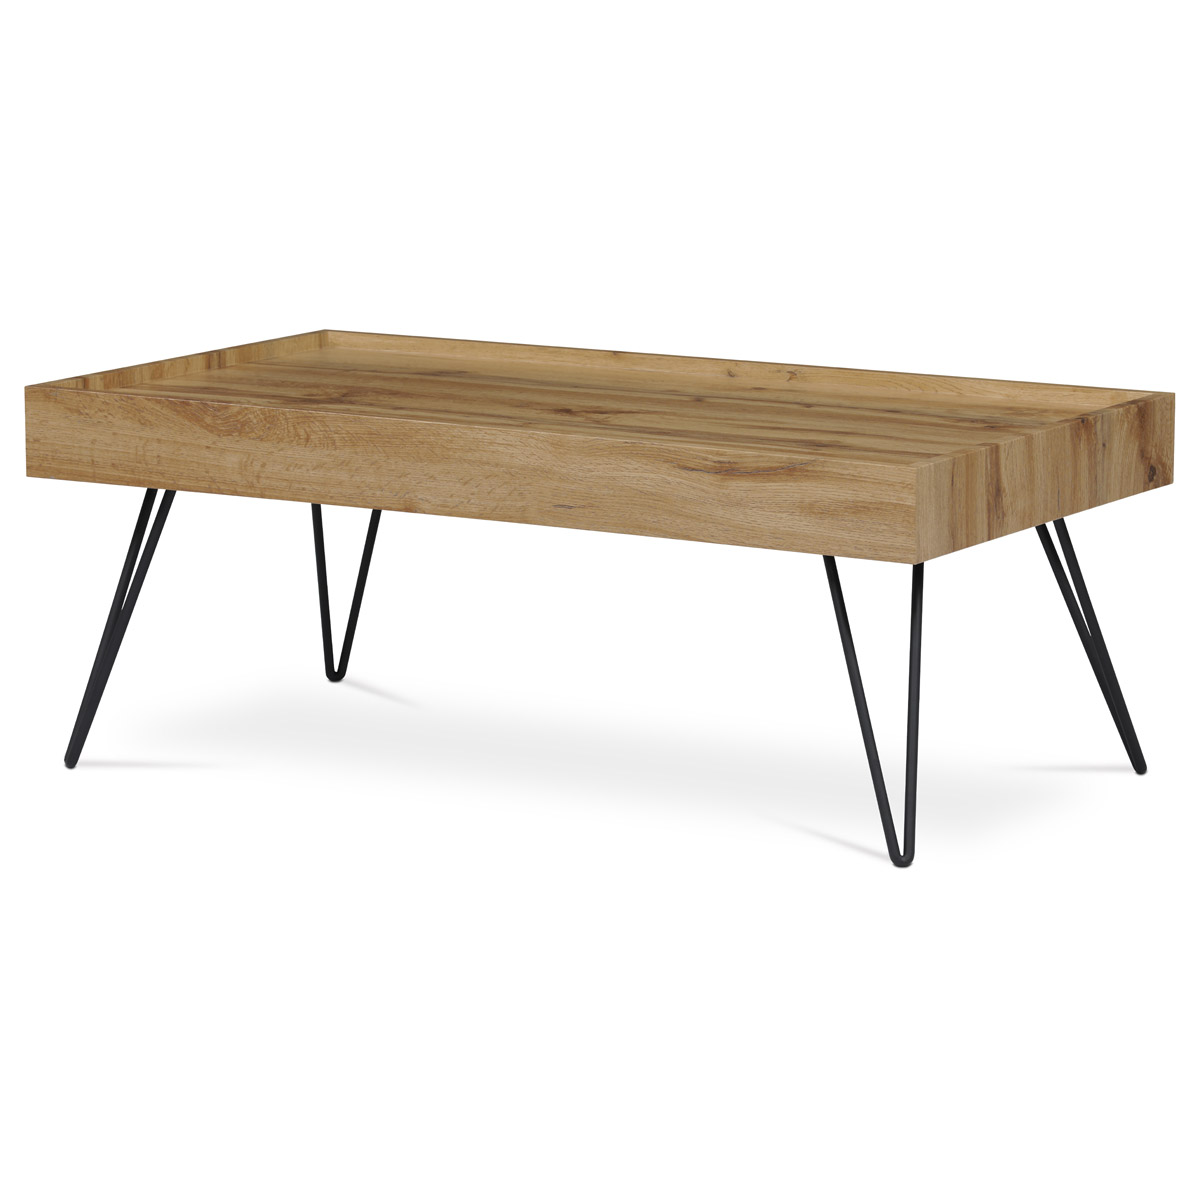 Konferenční stolek 110x60x42 cm, deska MDF, 3D dekor divoký dub, kov - černý mat